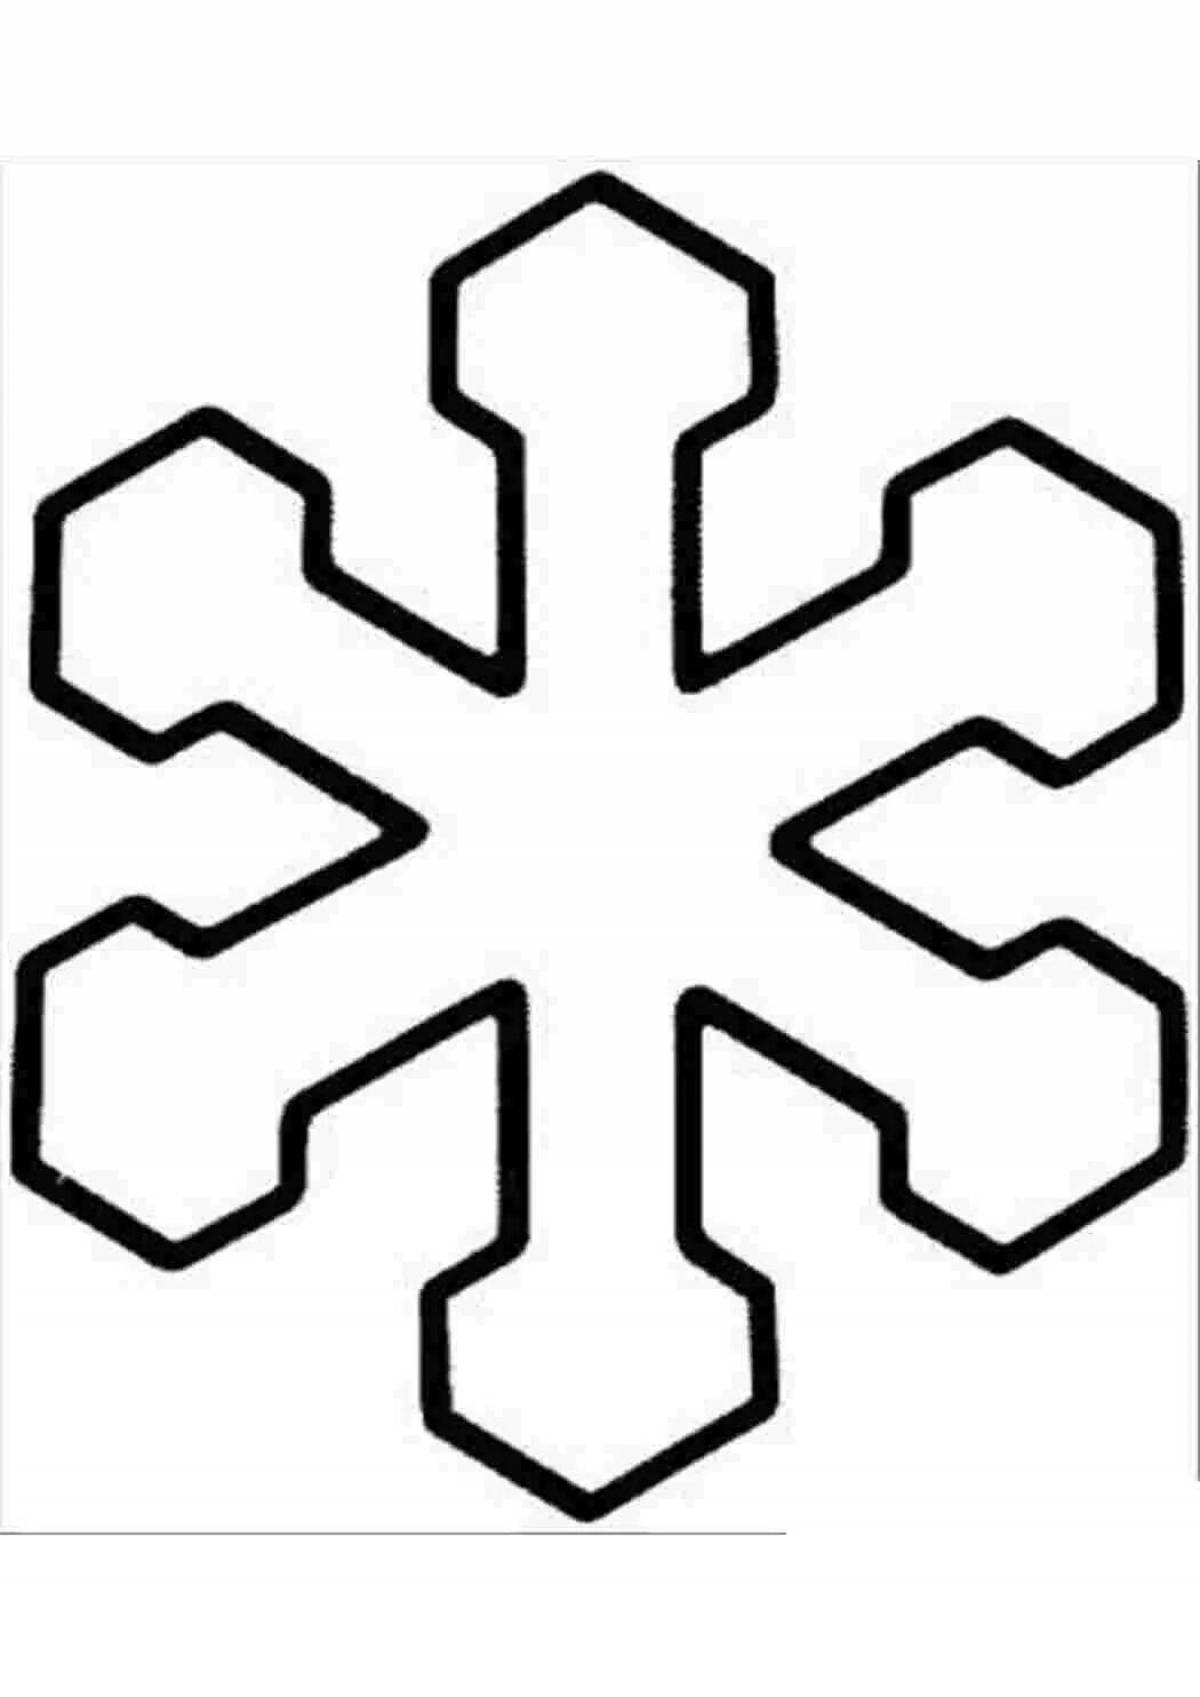 Gorgeous snowflake pattern coloring page